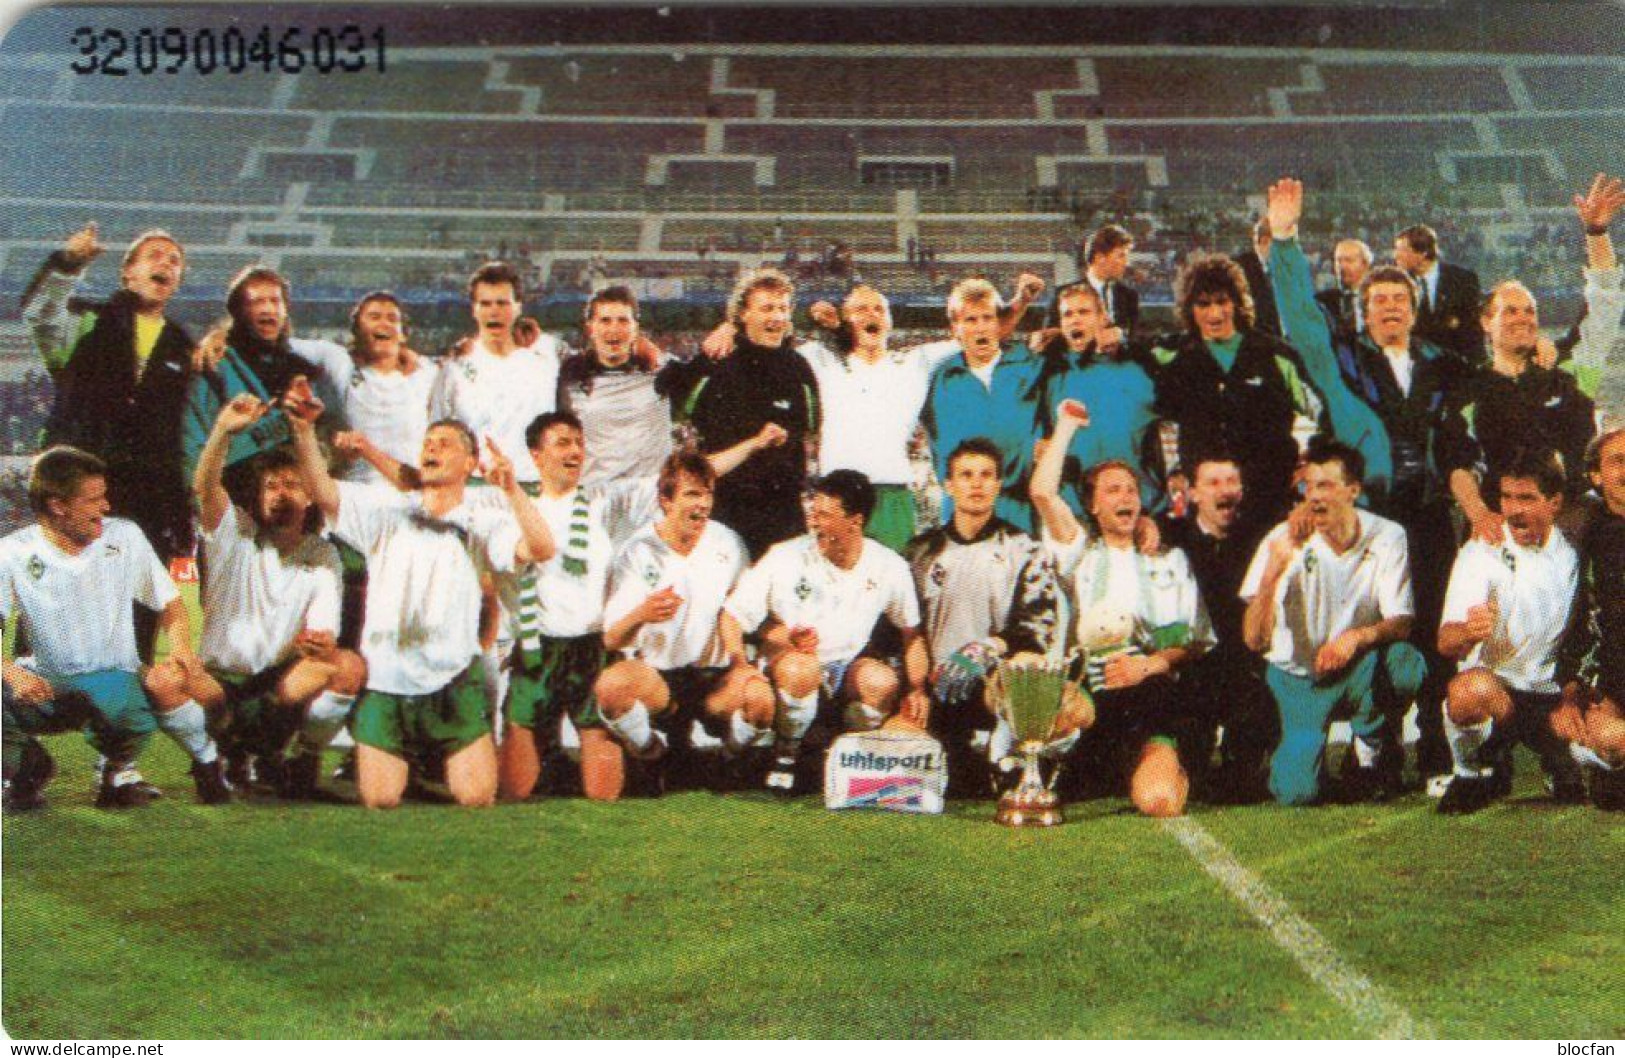 Pokalsieg Werder Bremen TK N *b 09/1992 200Expl.(K259) ** 50€ Visitenkarte Cheftrainer VIP TC Soccer On Telecard Germany - V-Series : VIP Y Tarjetas De Visita